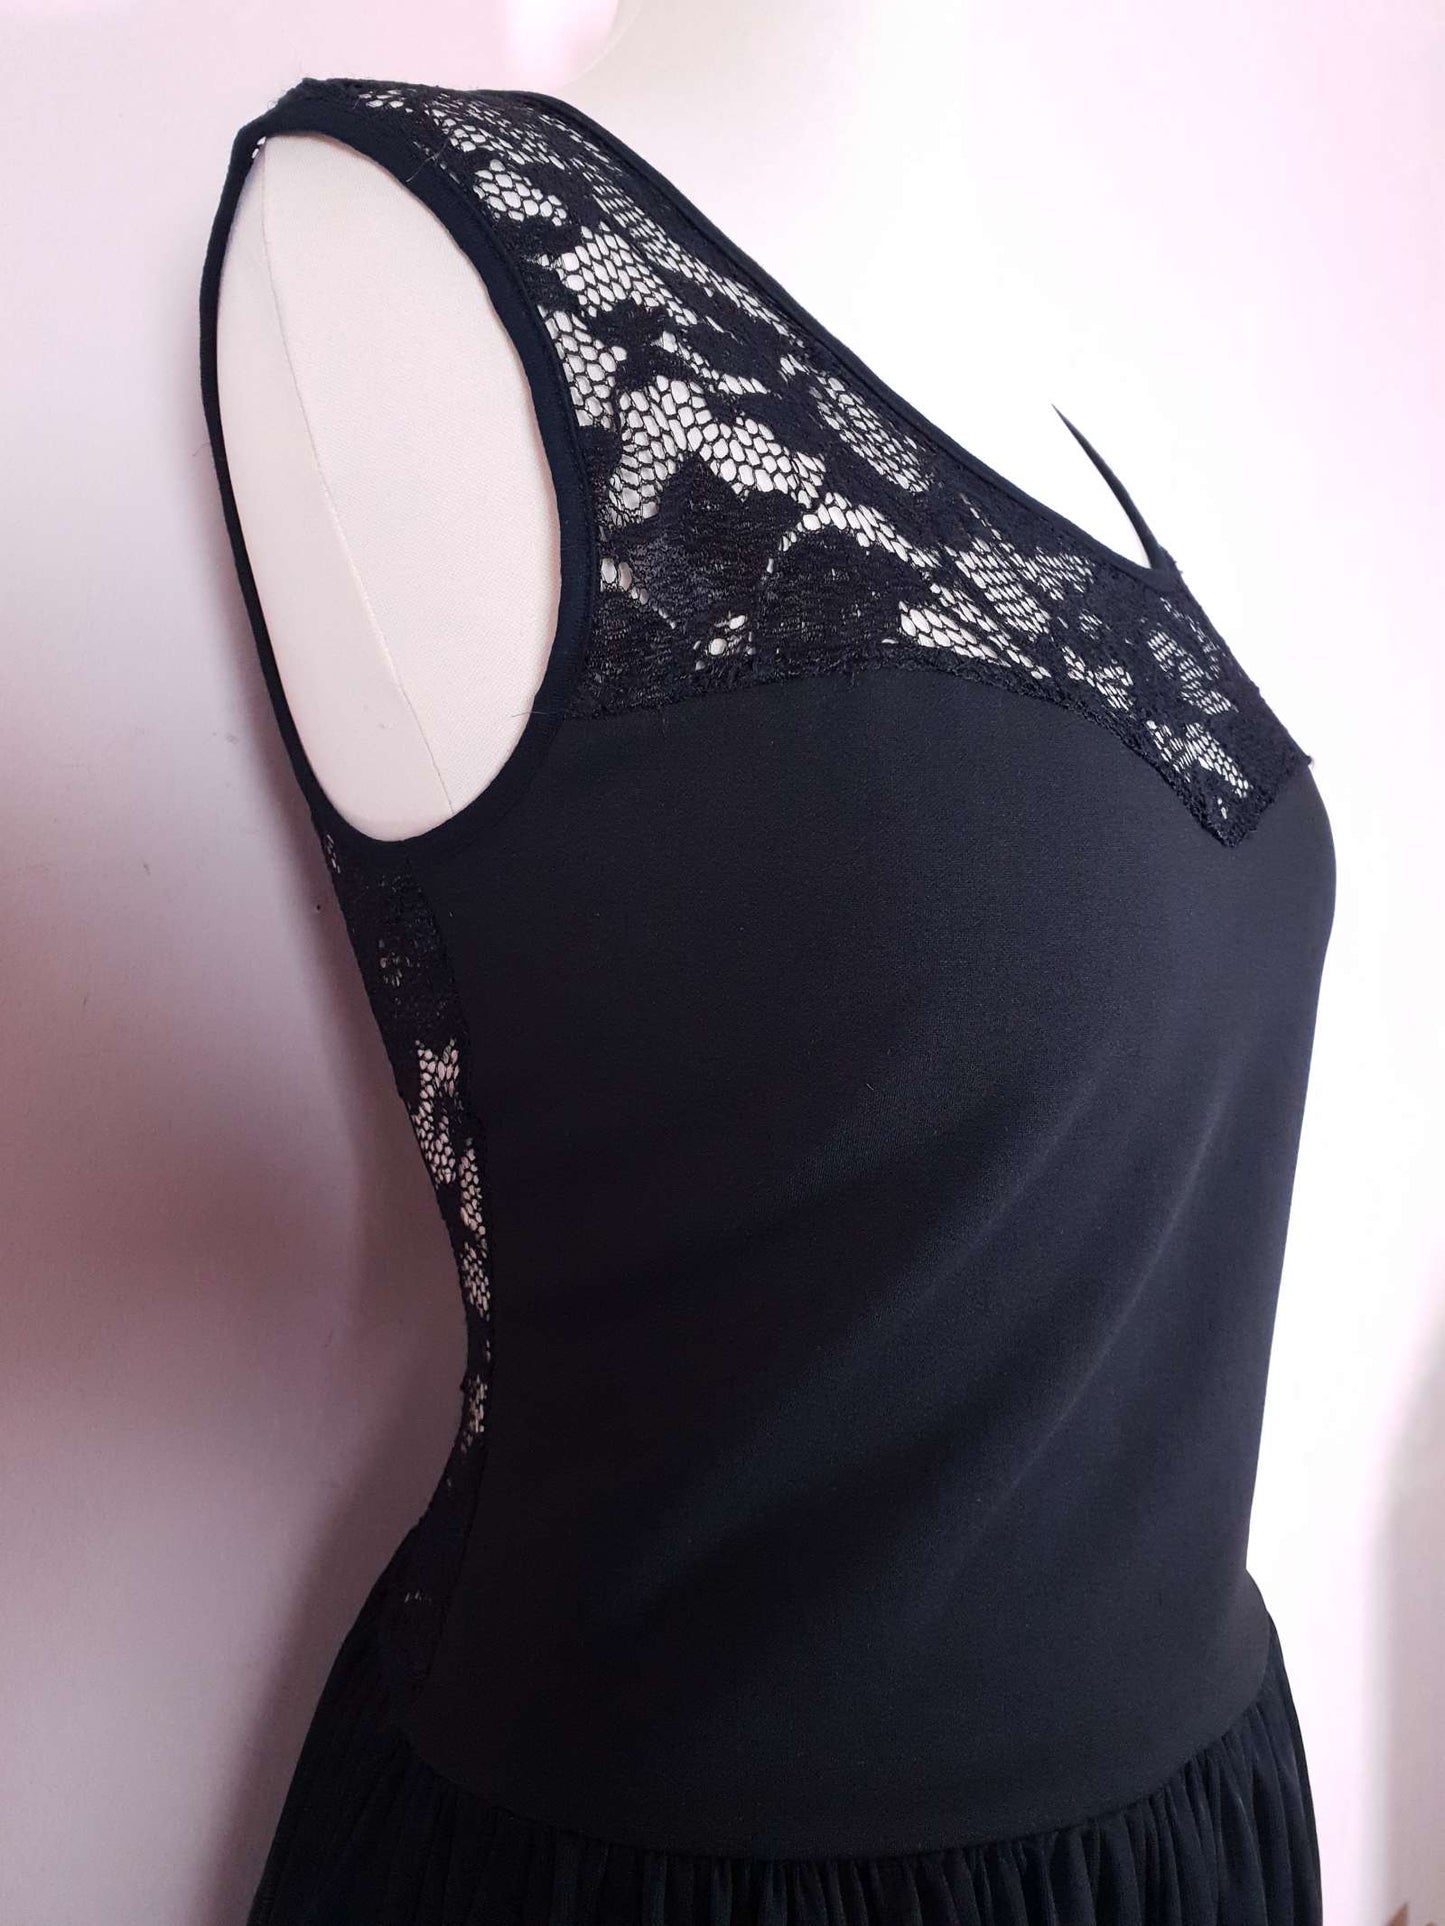 Vintage 90s Black Evening Dress Size 12 LBD Fit & Flare Lace Chiffon Party